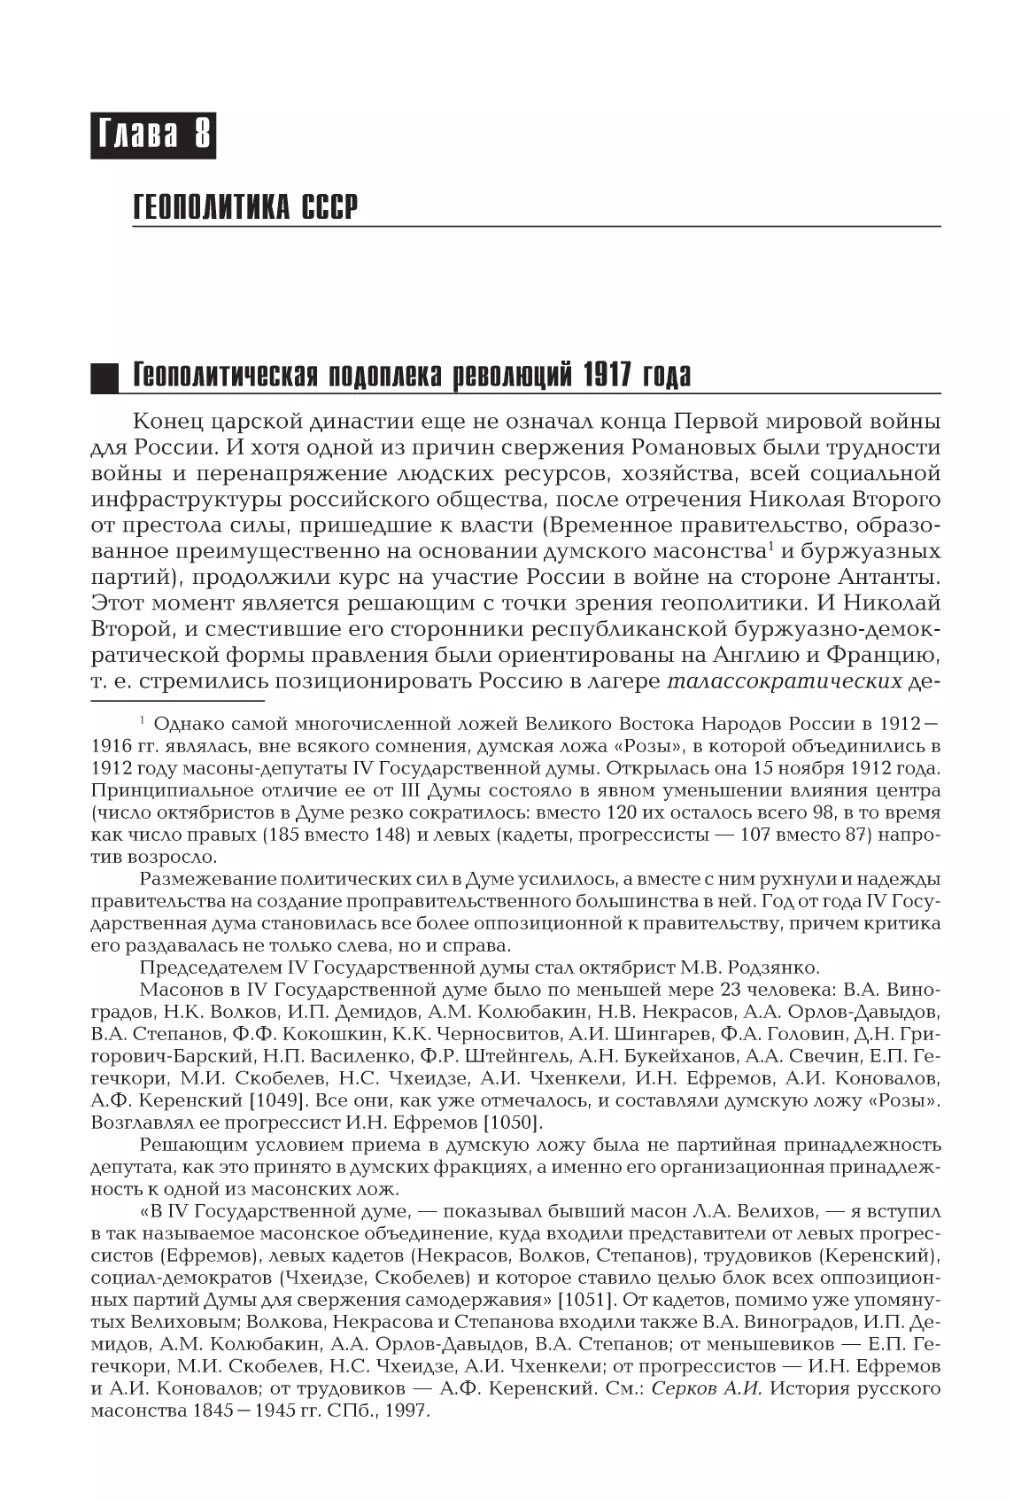 Глава 8
Геополитика СССР
Геополитическая подоплека революций 1917 года